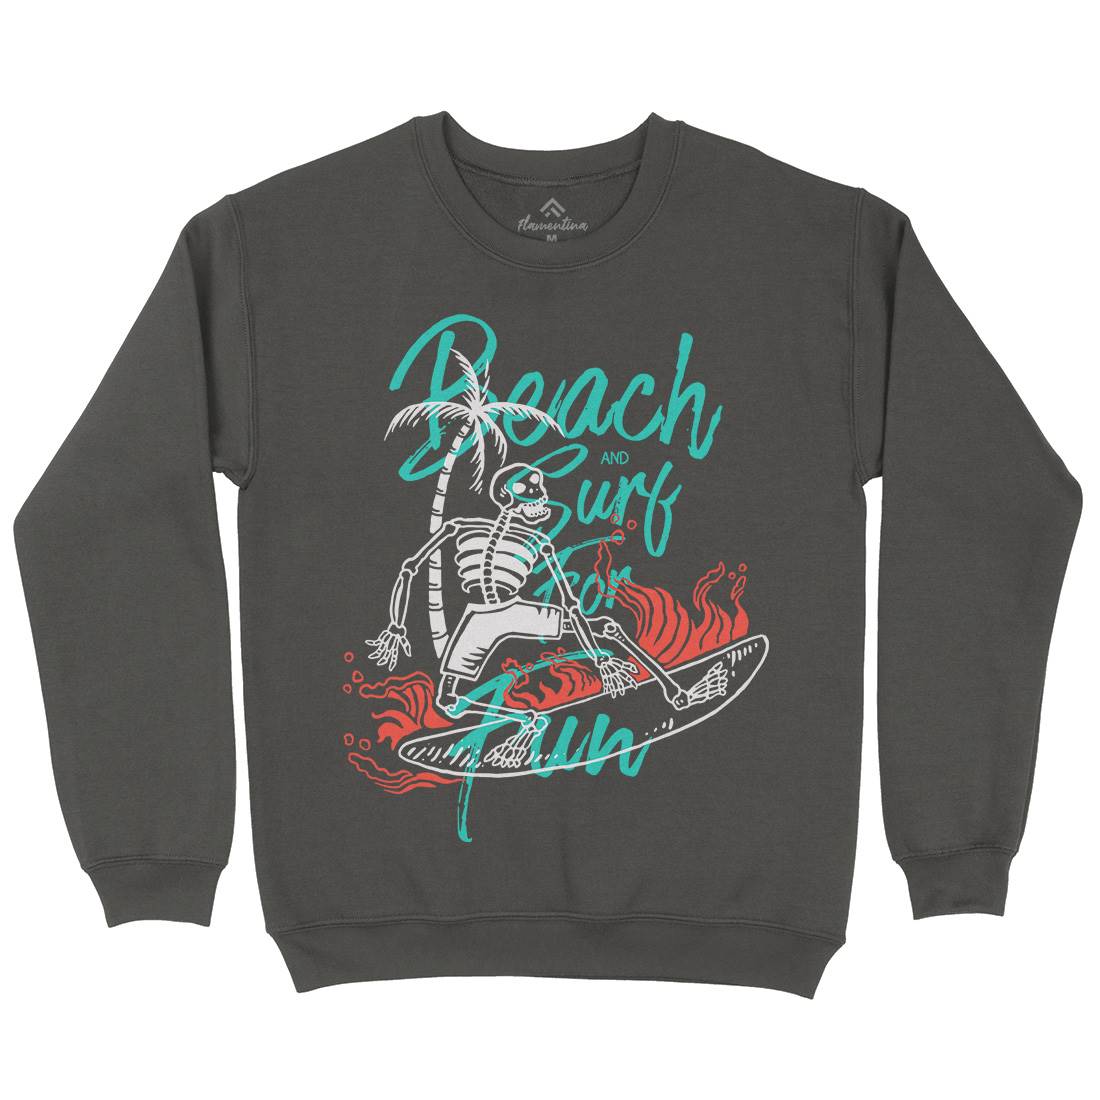 Or Die Kids Crew Neck Sweatshirt Surf C782